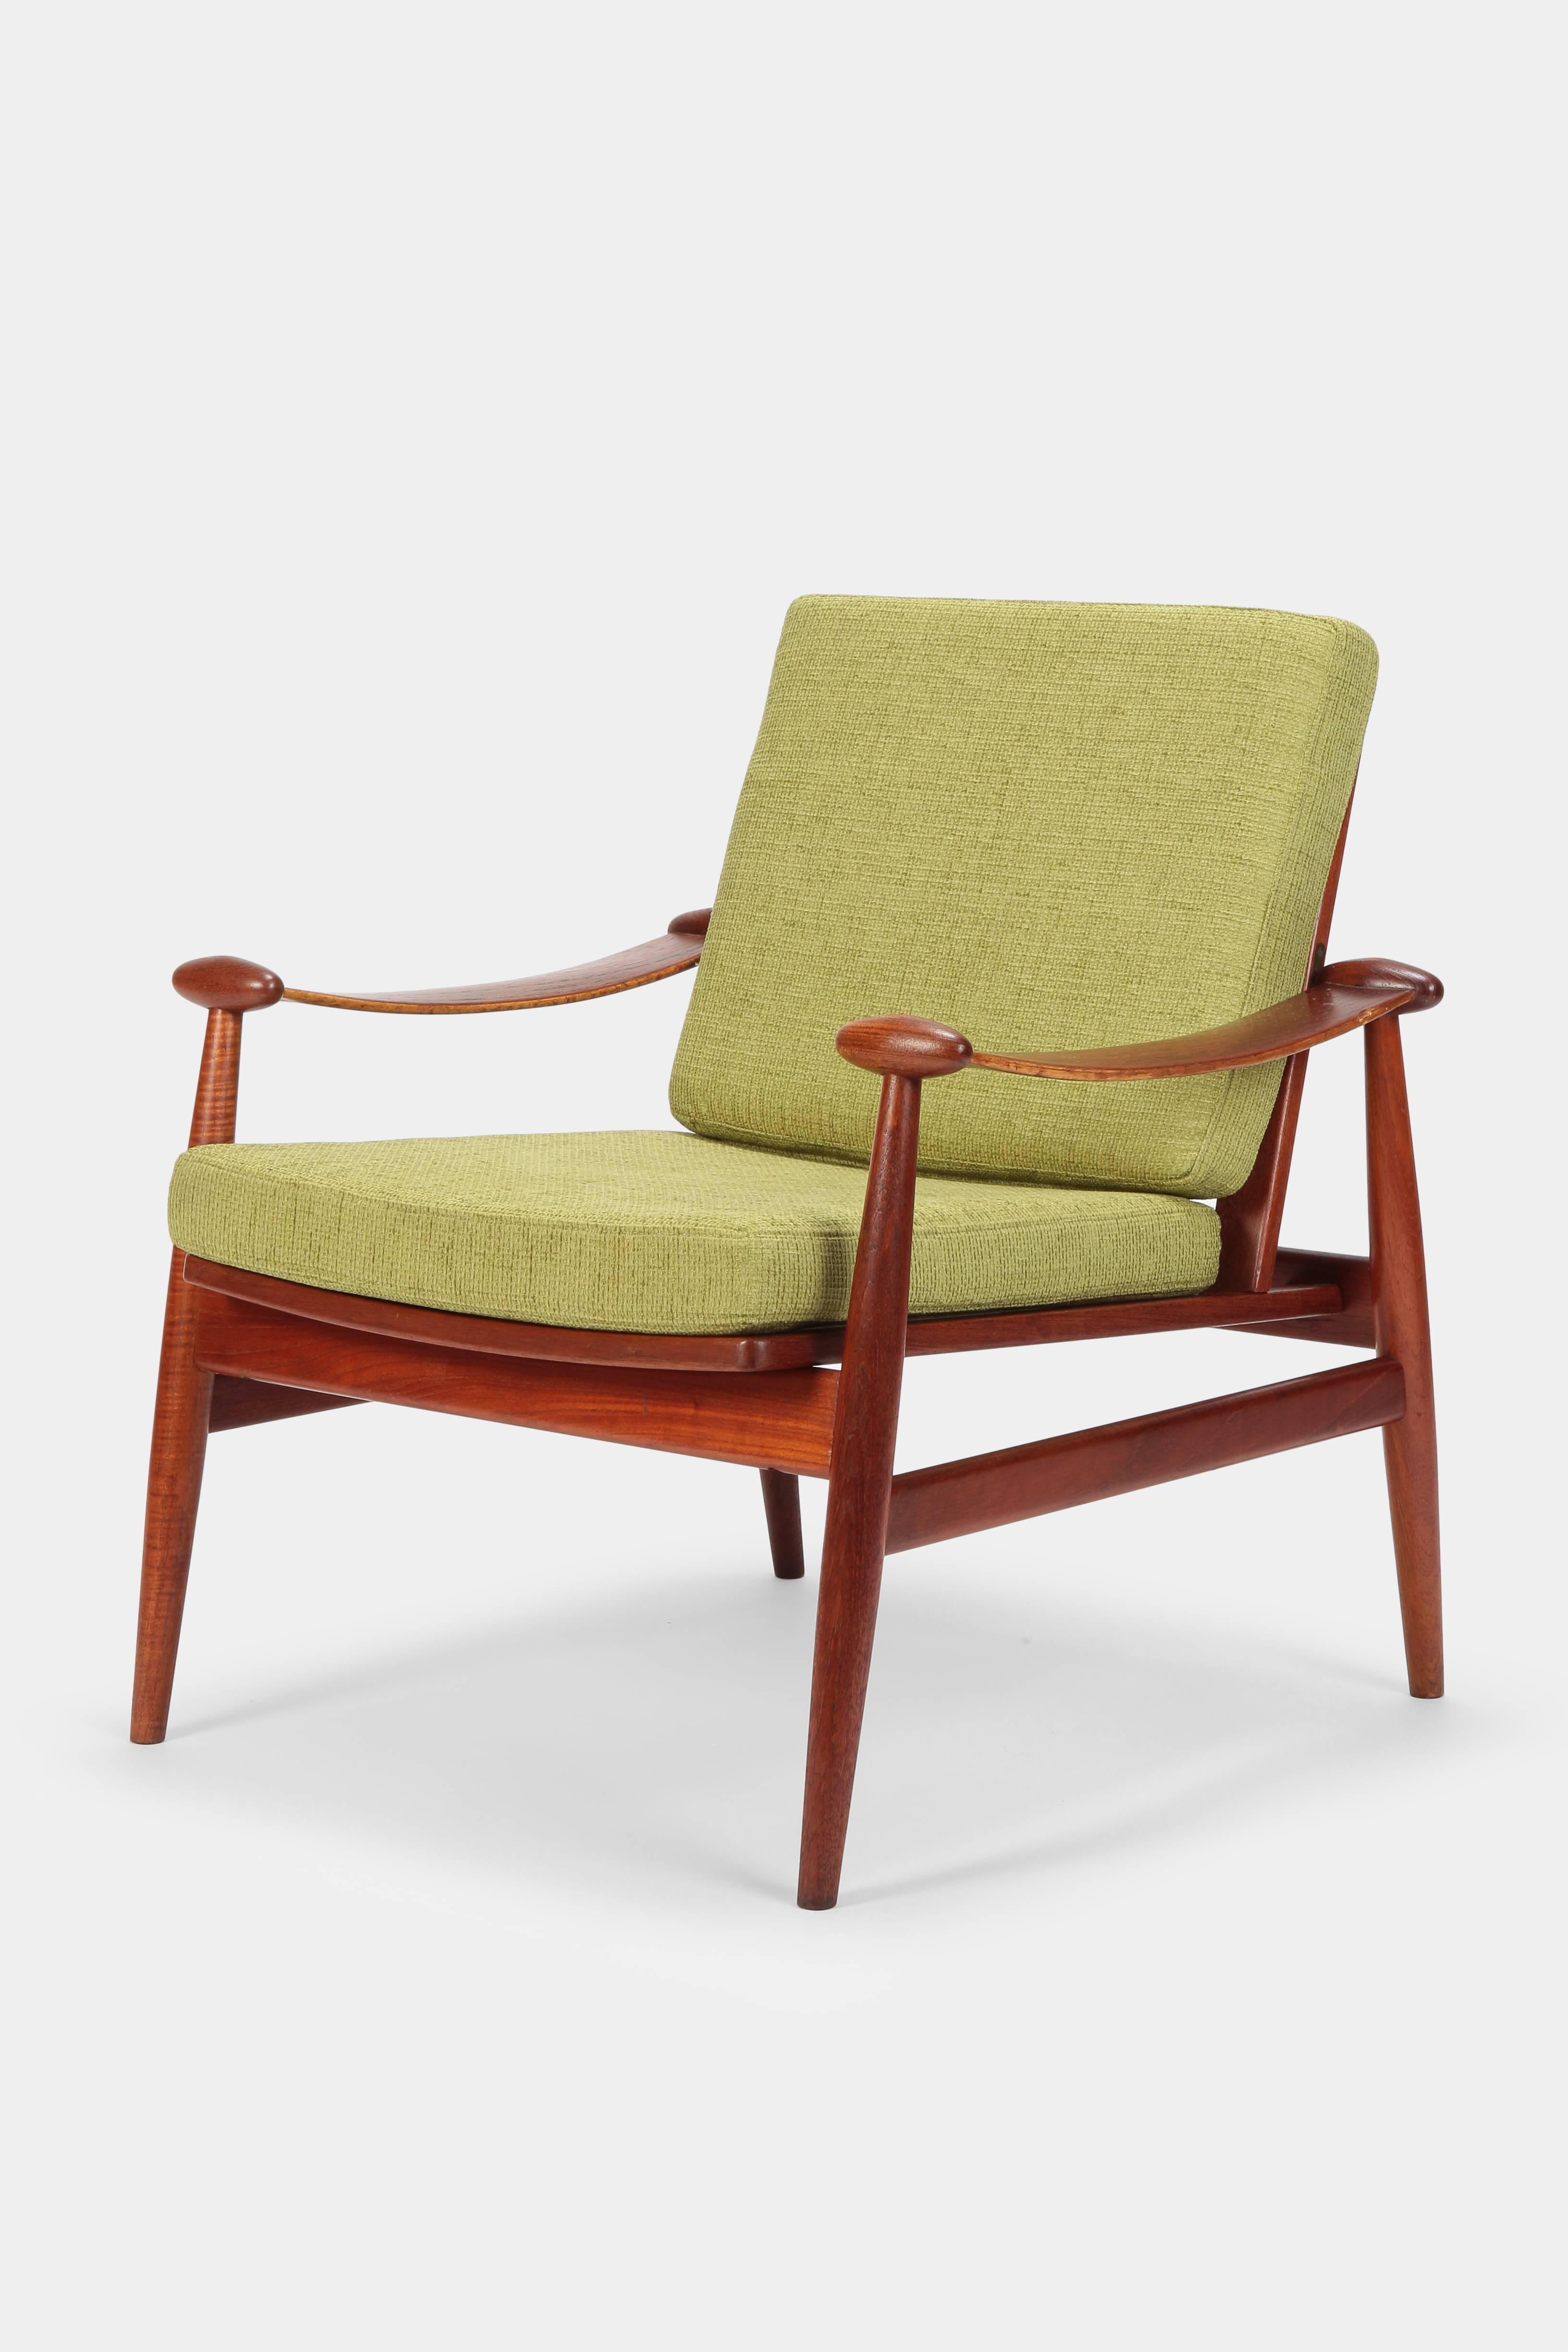 Mid-20th Century Finn Juhl “Spade” Lounge Chairs France & Daverkosen, 1960s